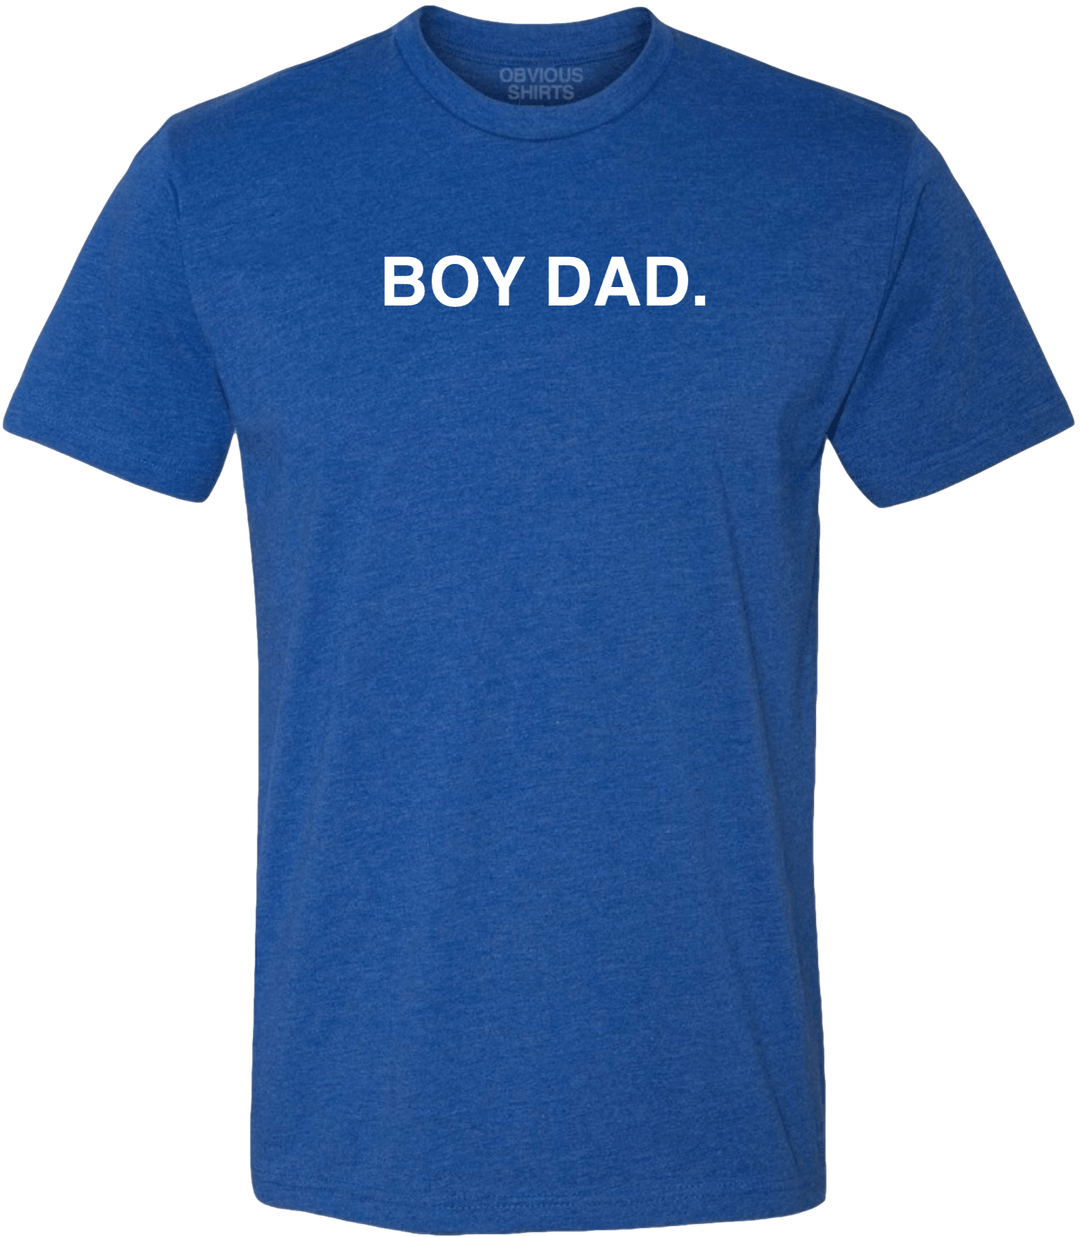 BOY DAD. - OBVIOUS SHIRTS